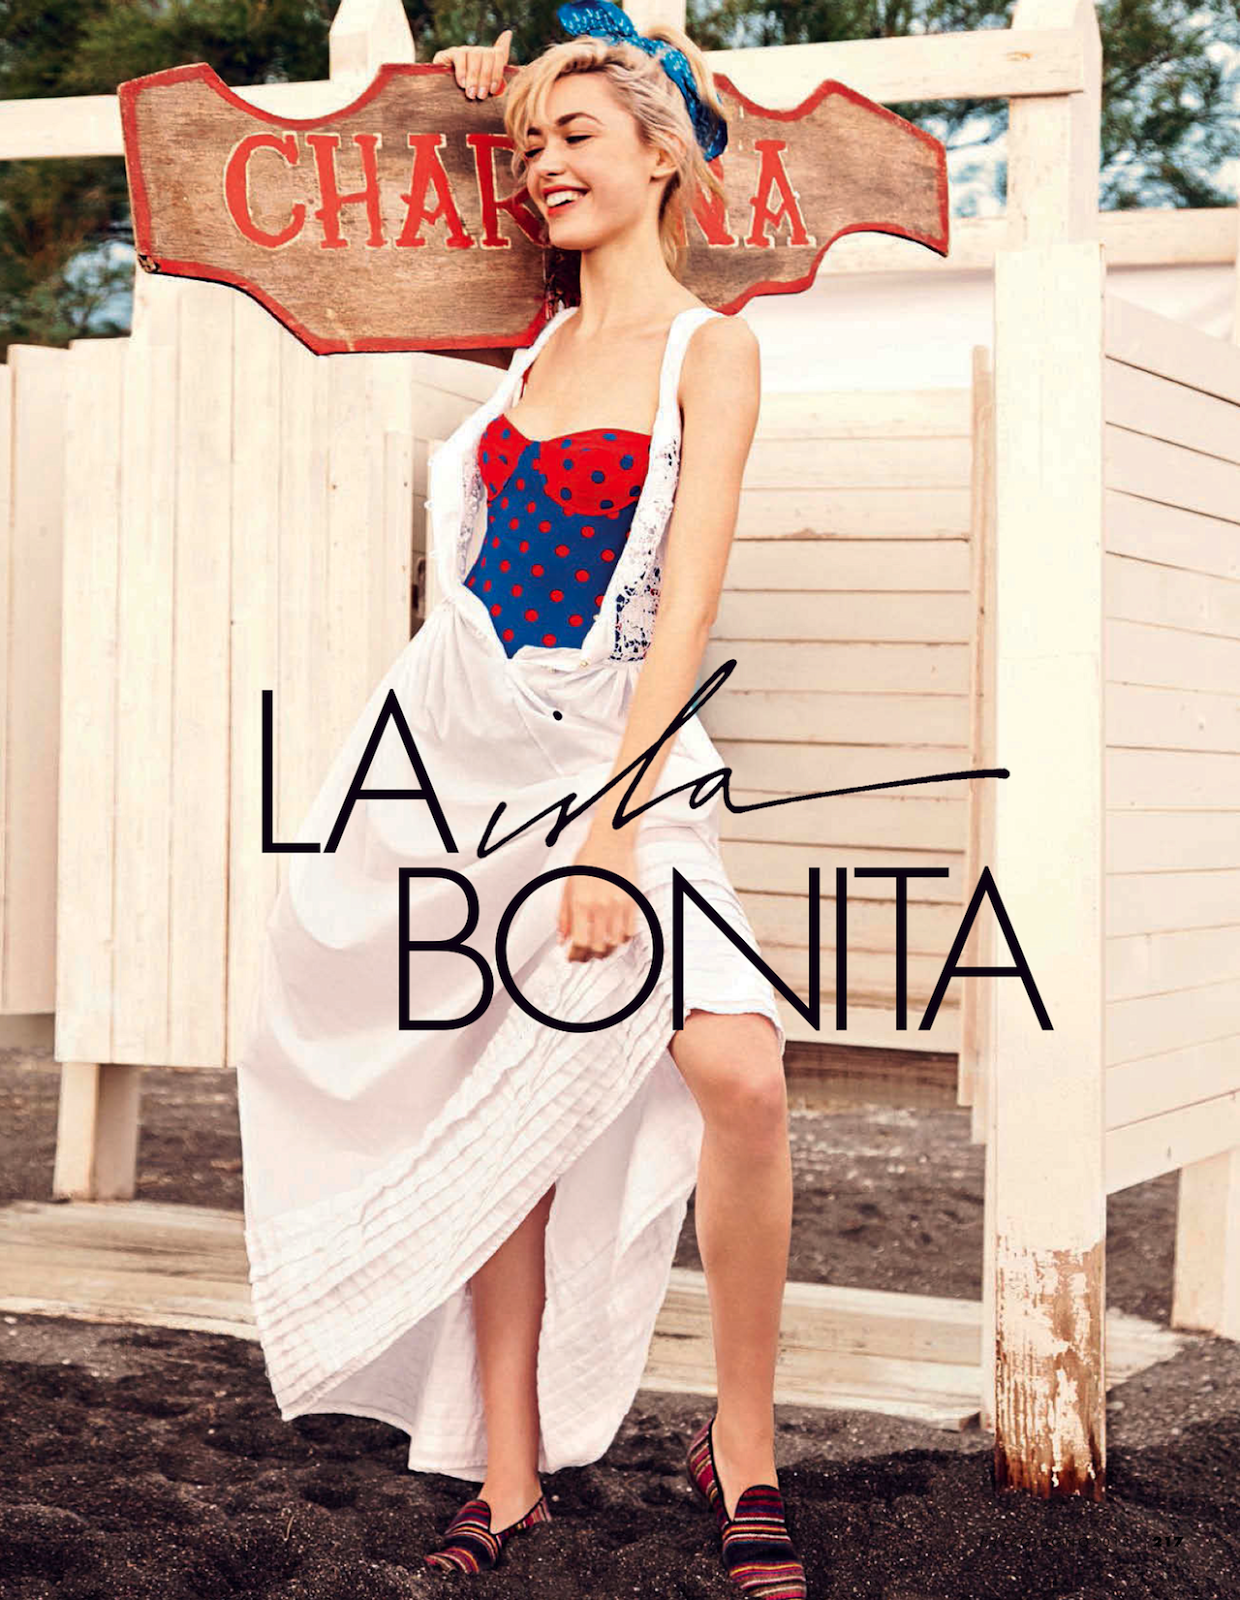 Elle Italia June 2013 “La Isla Bonita” | Carlotta Manaigo | Elle Italia | Eva Geraldine Fontanelli | Numerique Retouch Photo Retouching Studio